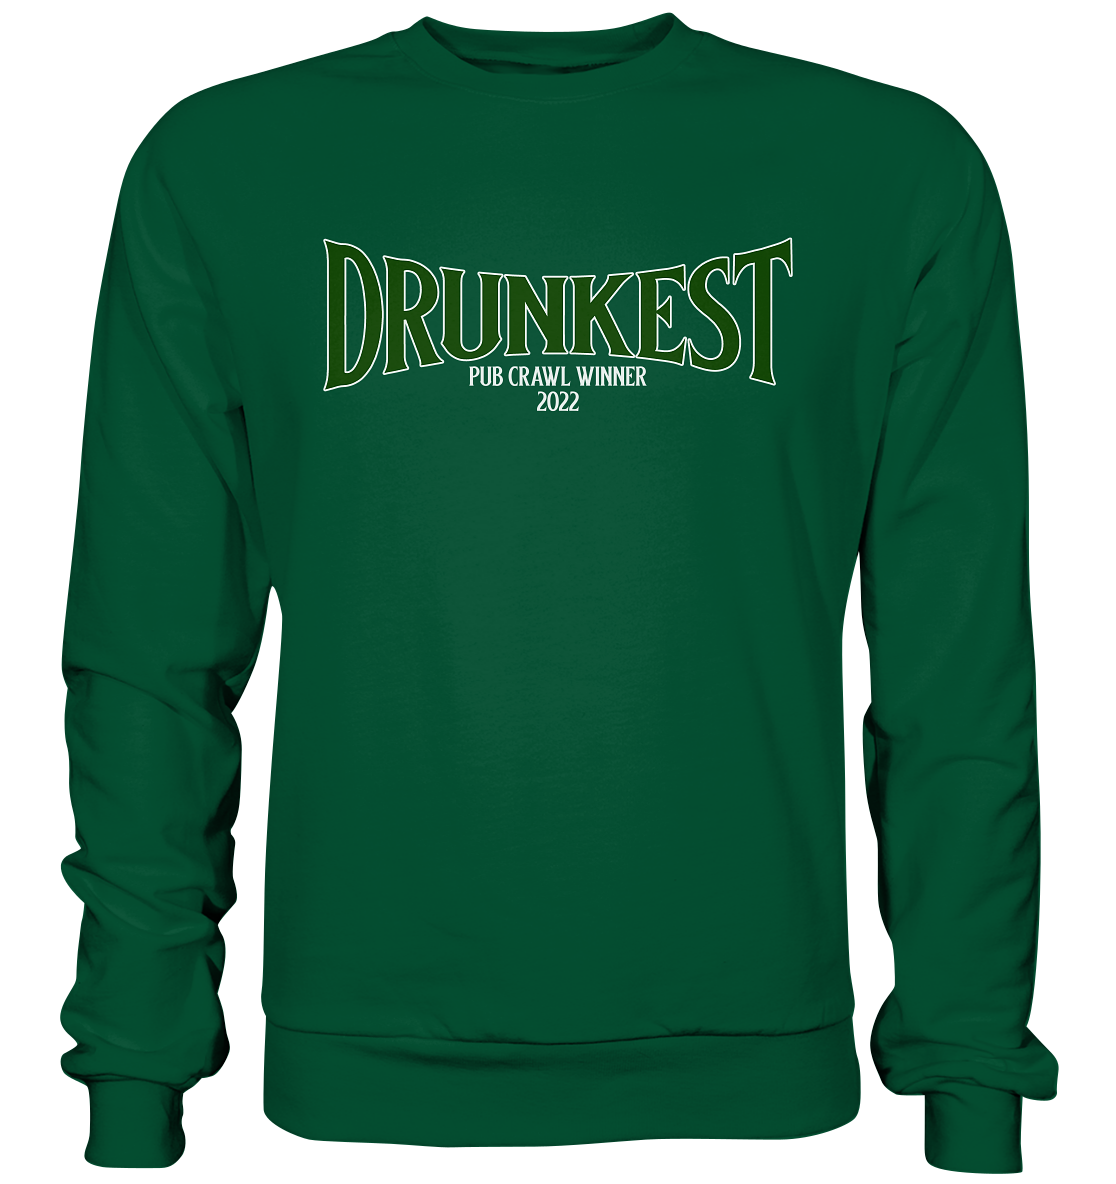 Drunkest "Pub Crawl Winner 2022" - Basic Sweatshirt